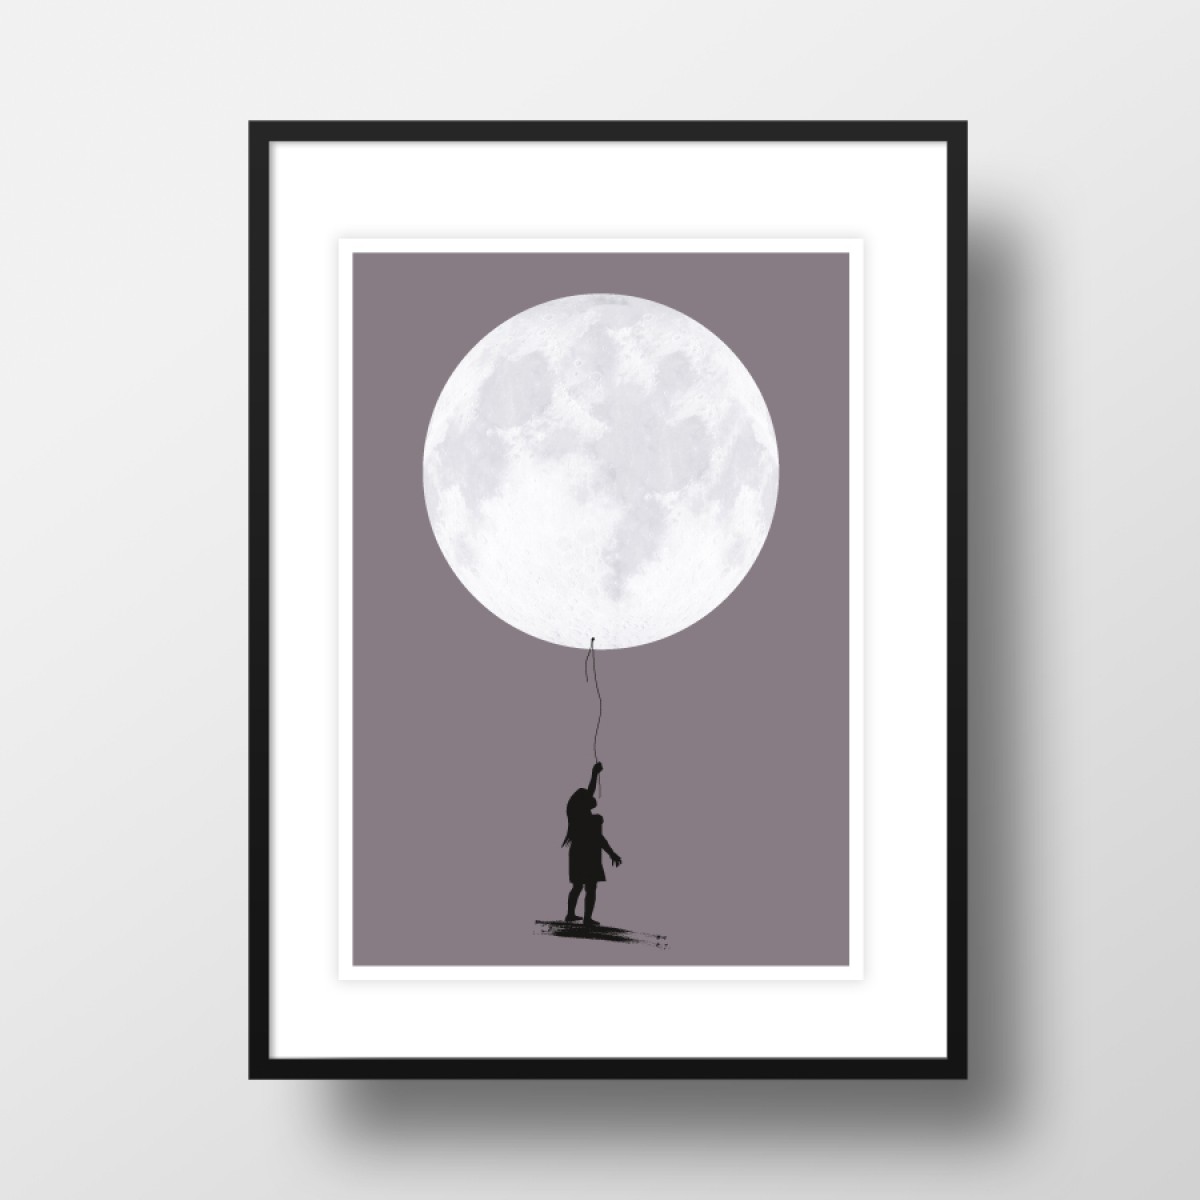 A4 Artprint "Moonballoon"